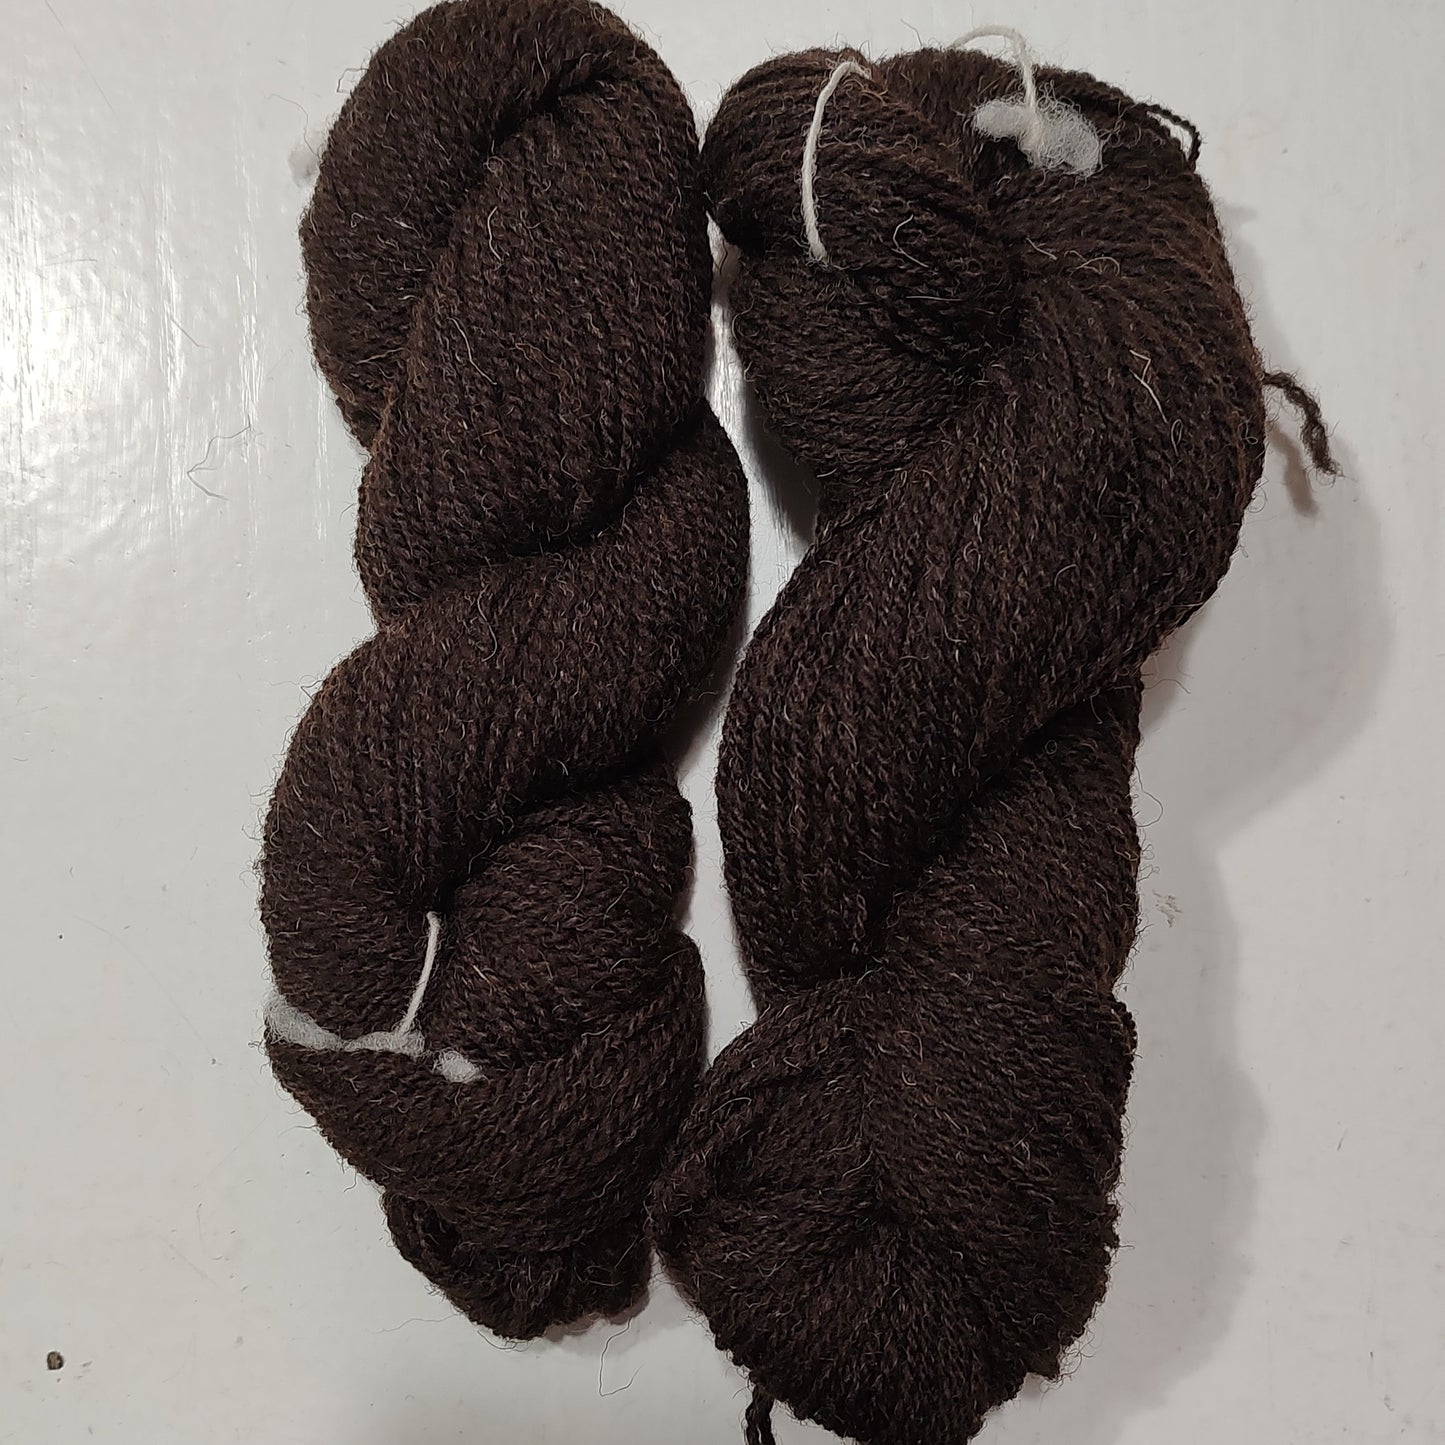 Yarn - Handspun natural wool